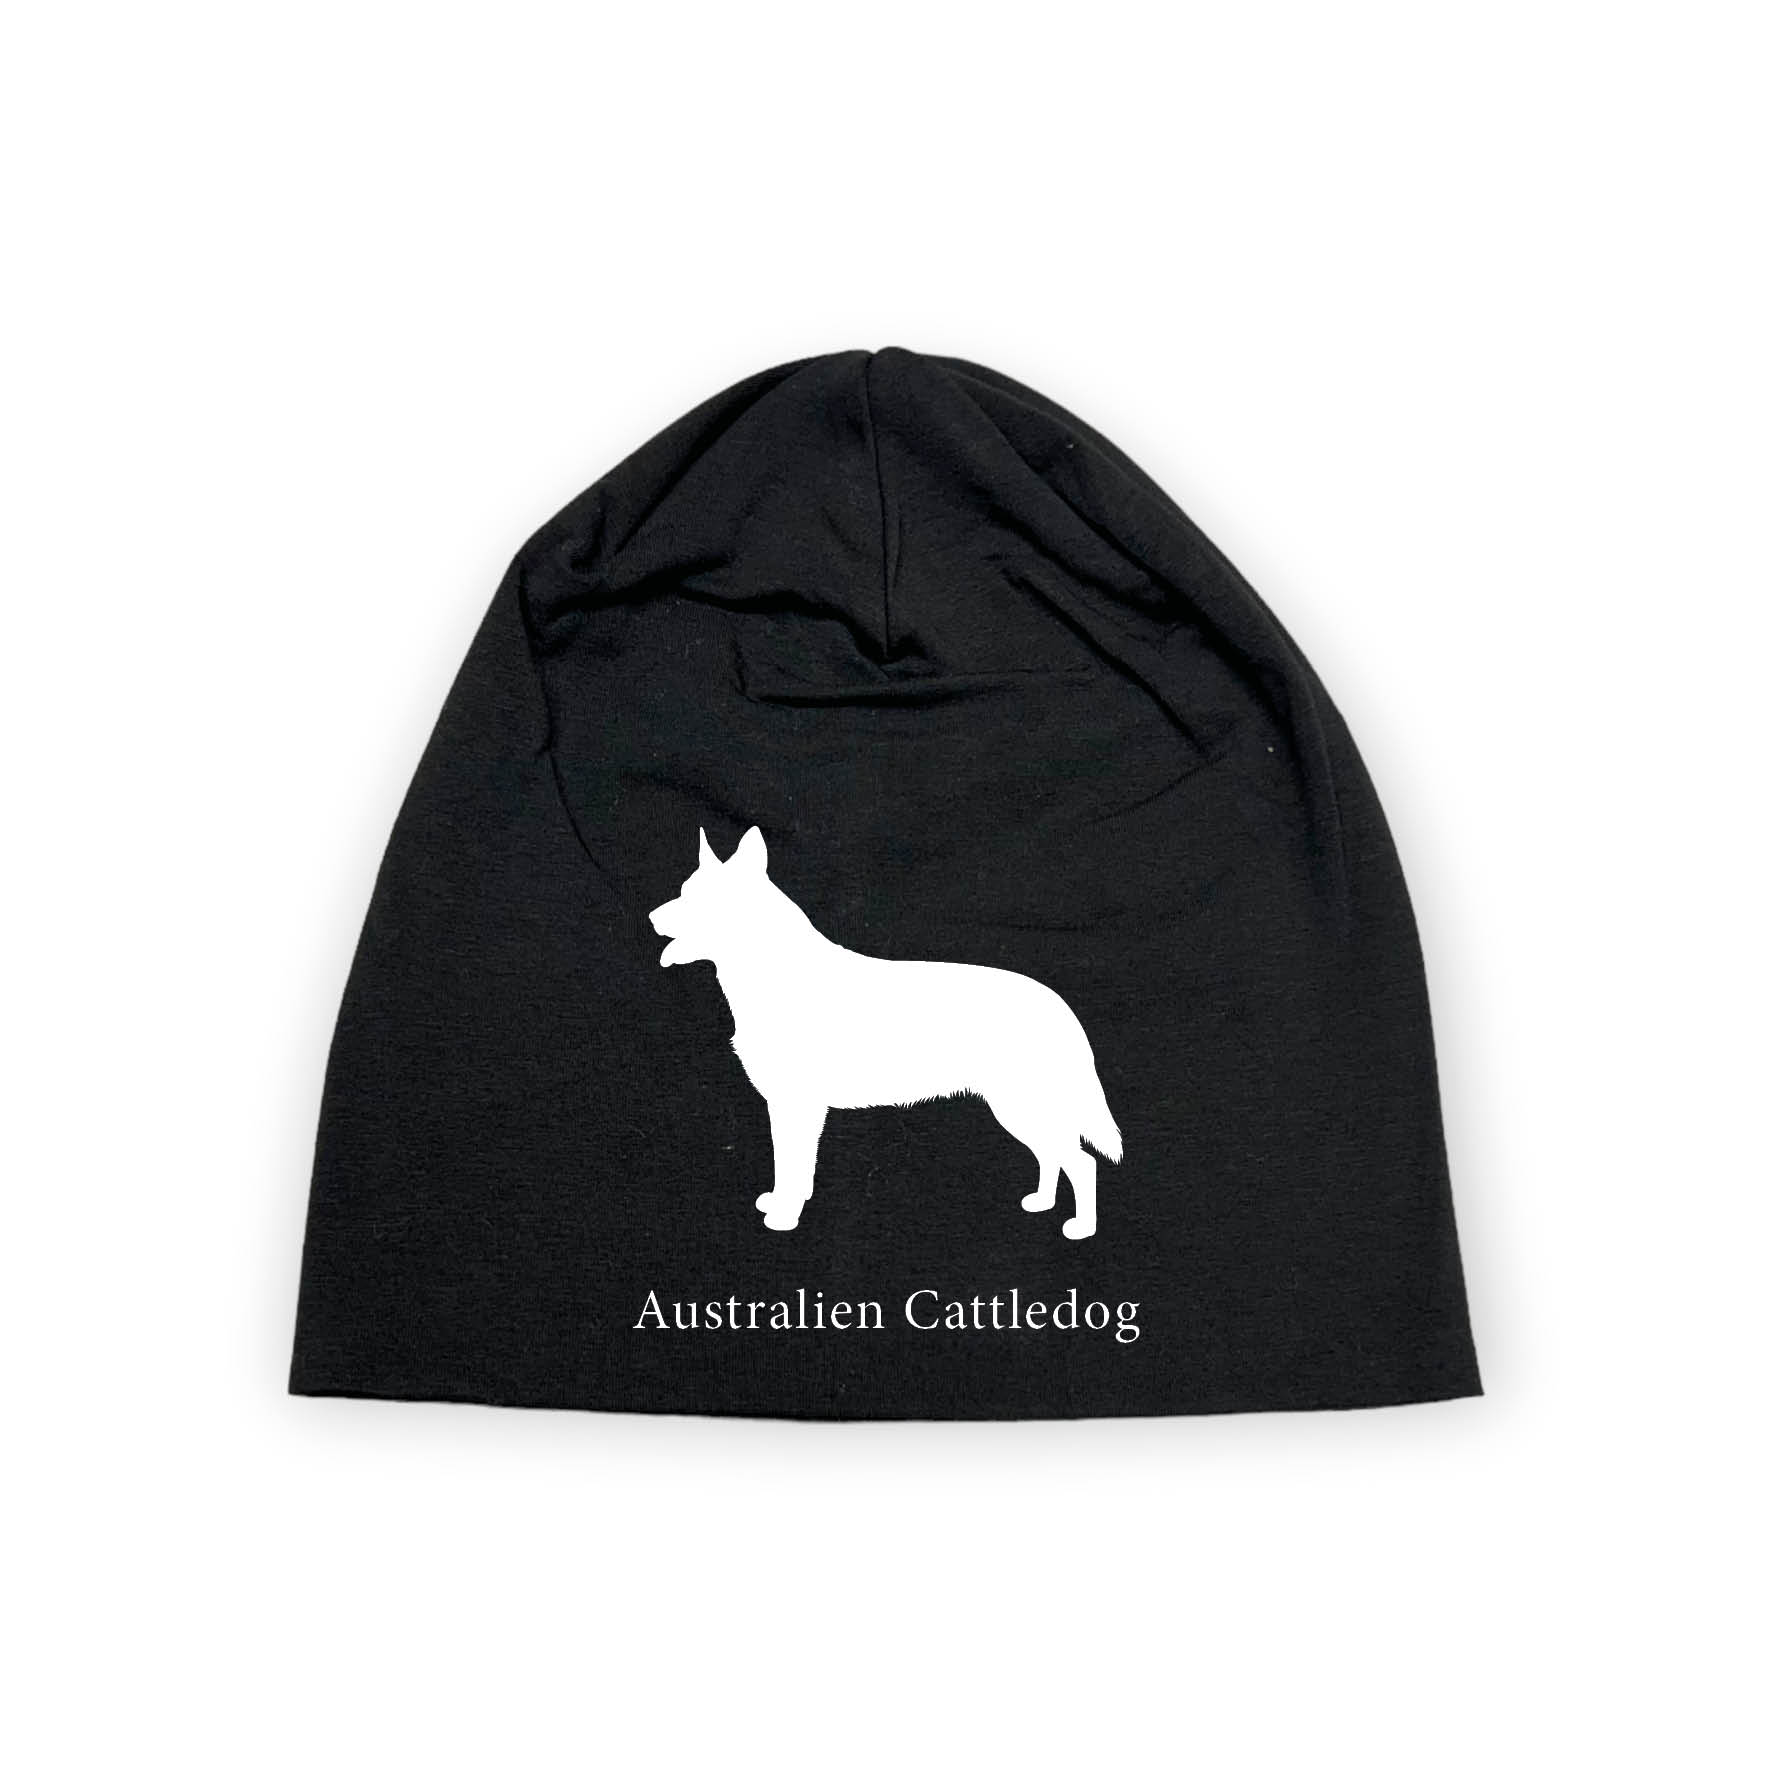 Bomulls mössa - Australian Cattledog